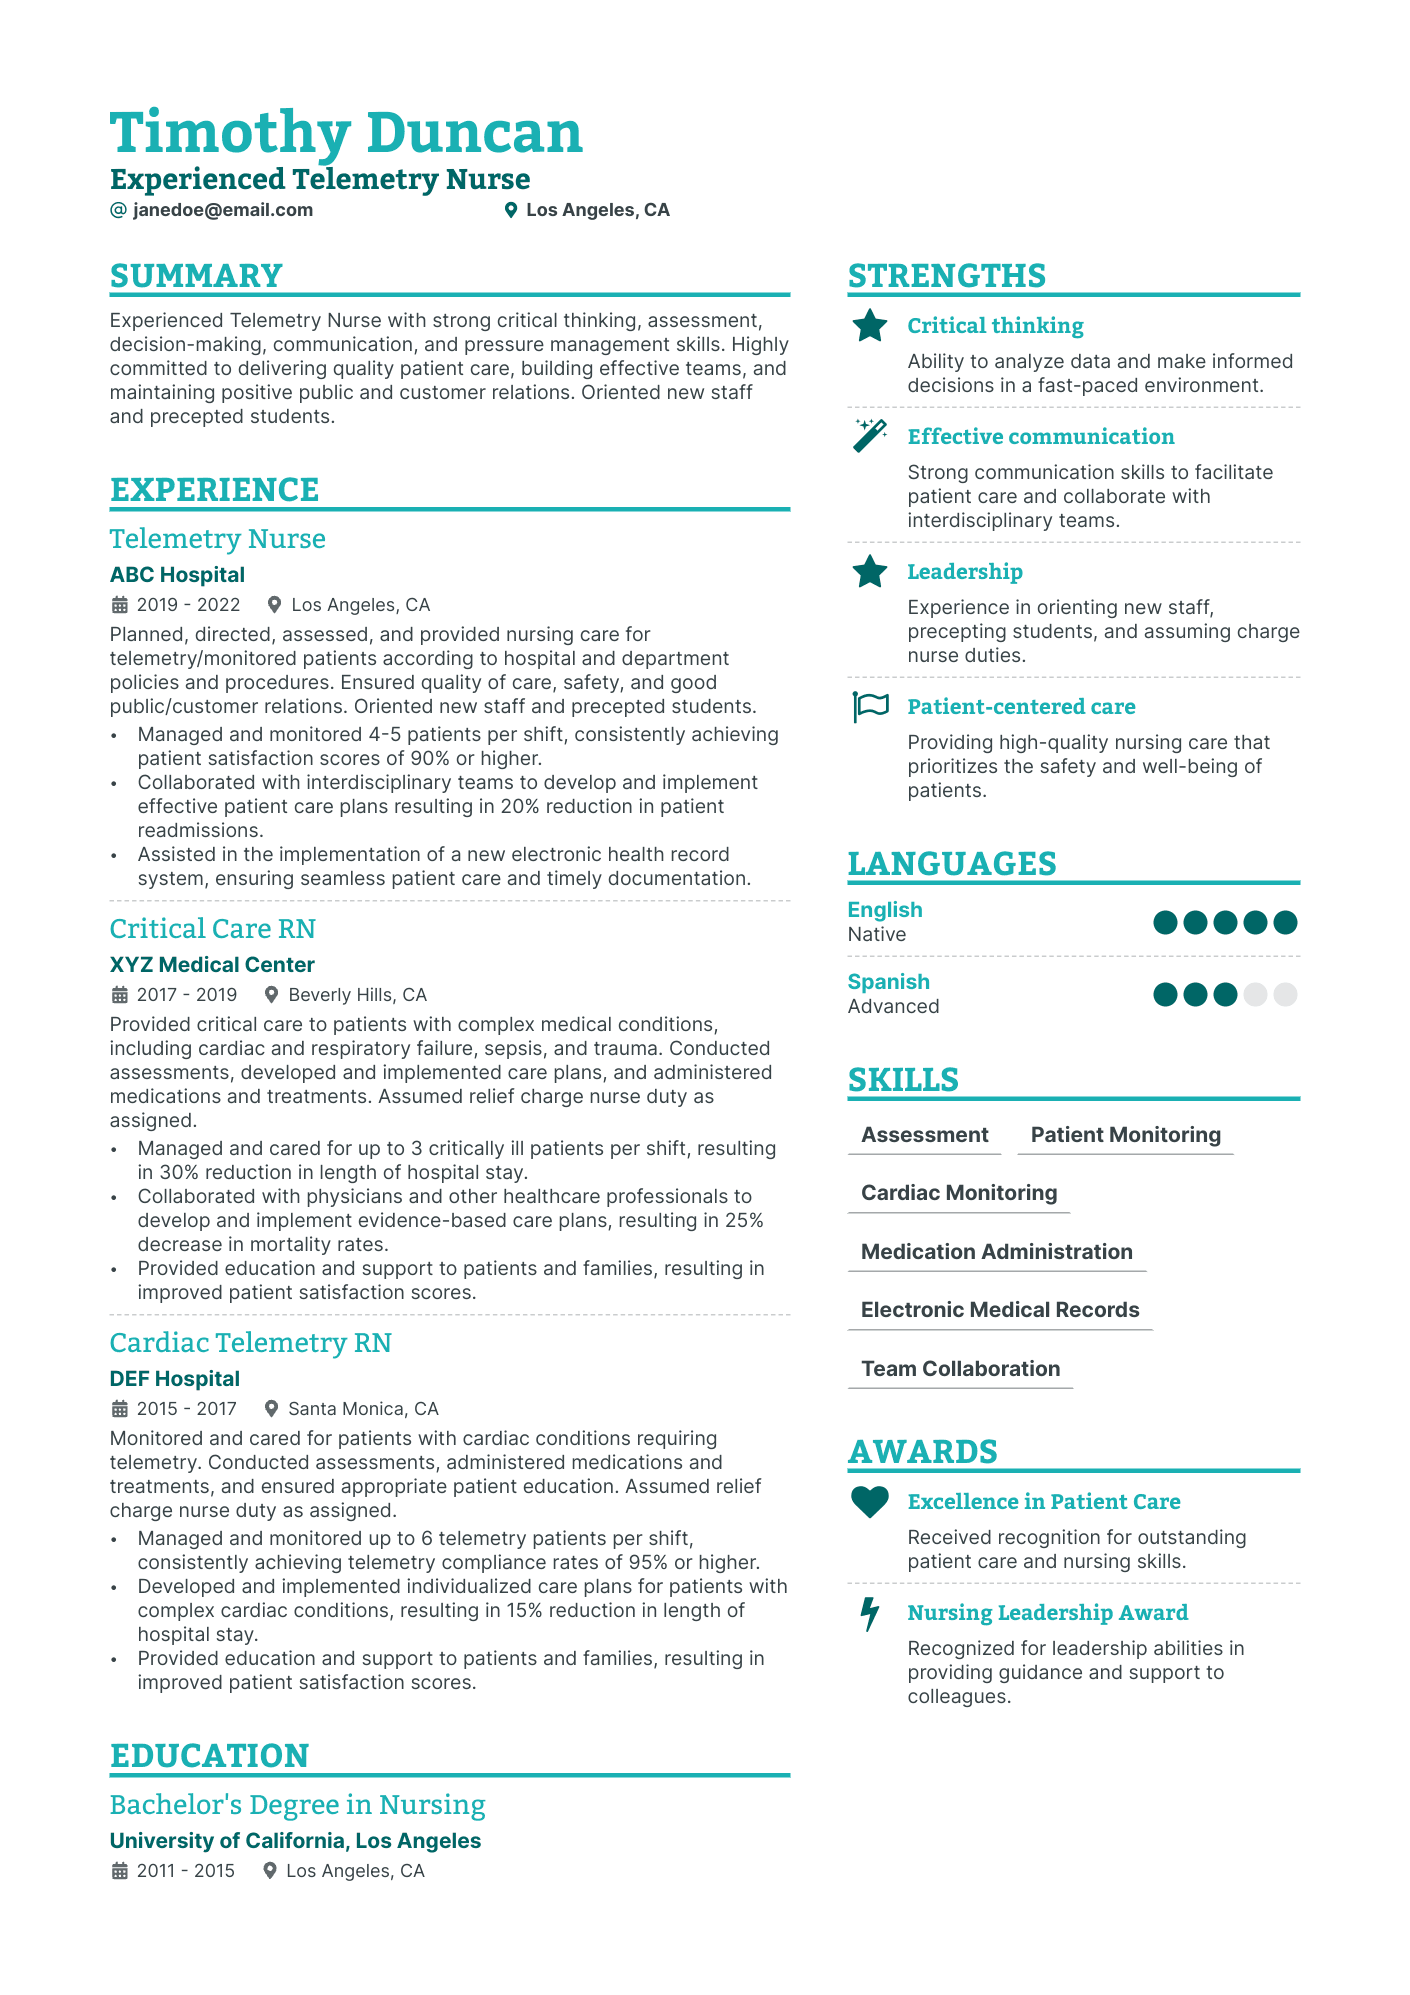 resume examples for registered nurse